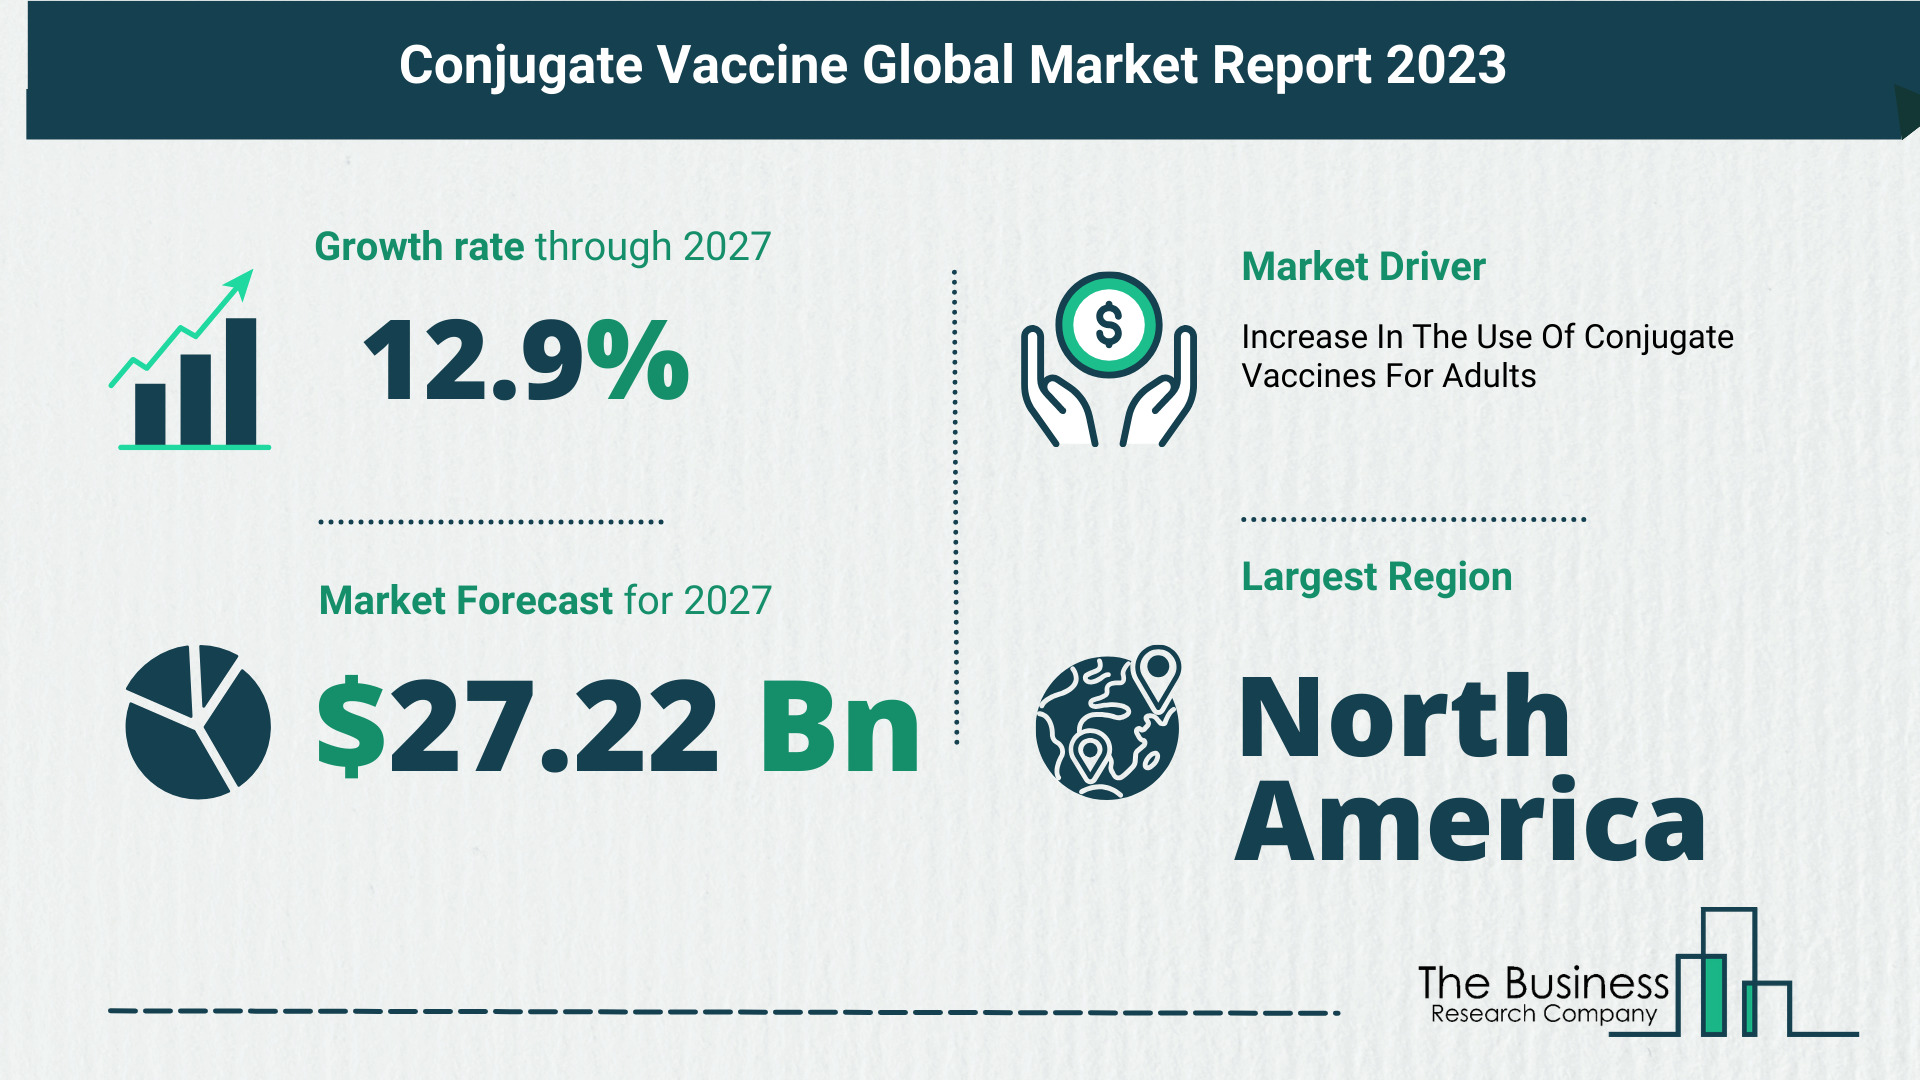 Key Takeaways From The Global Conjugate Vaccine Market Forecast 2023